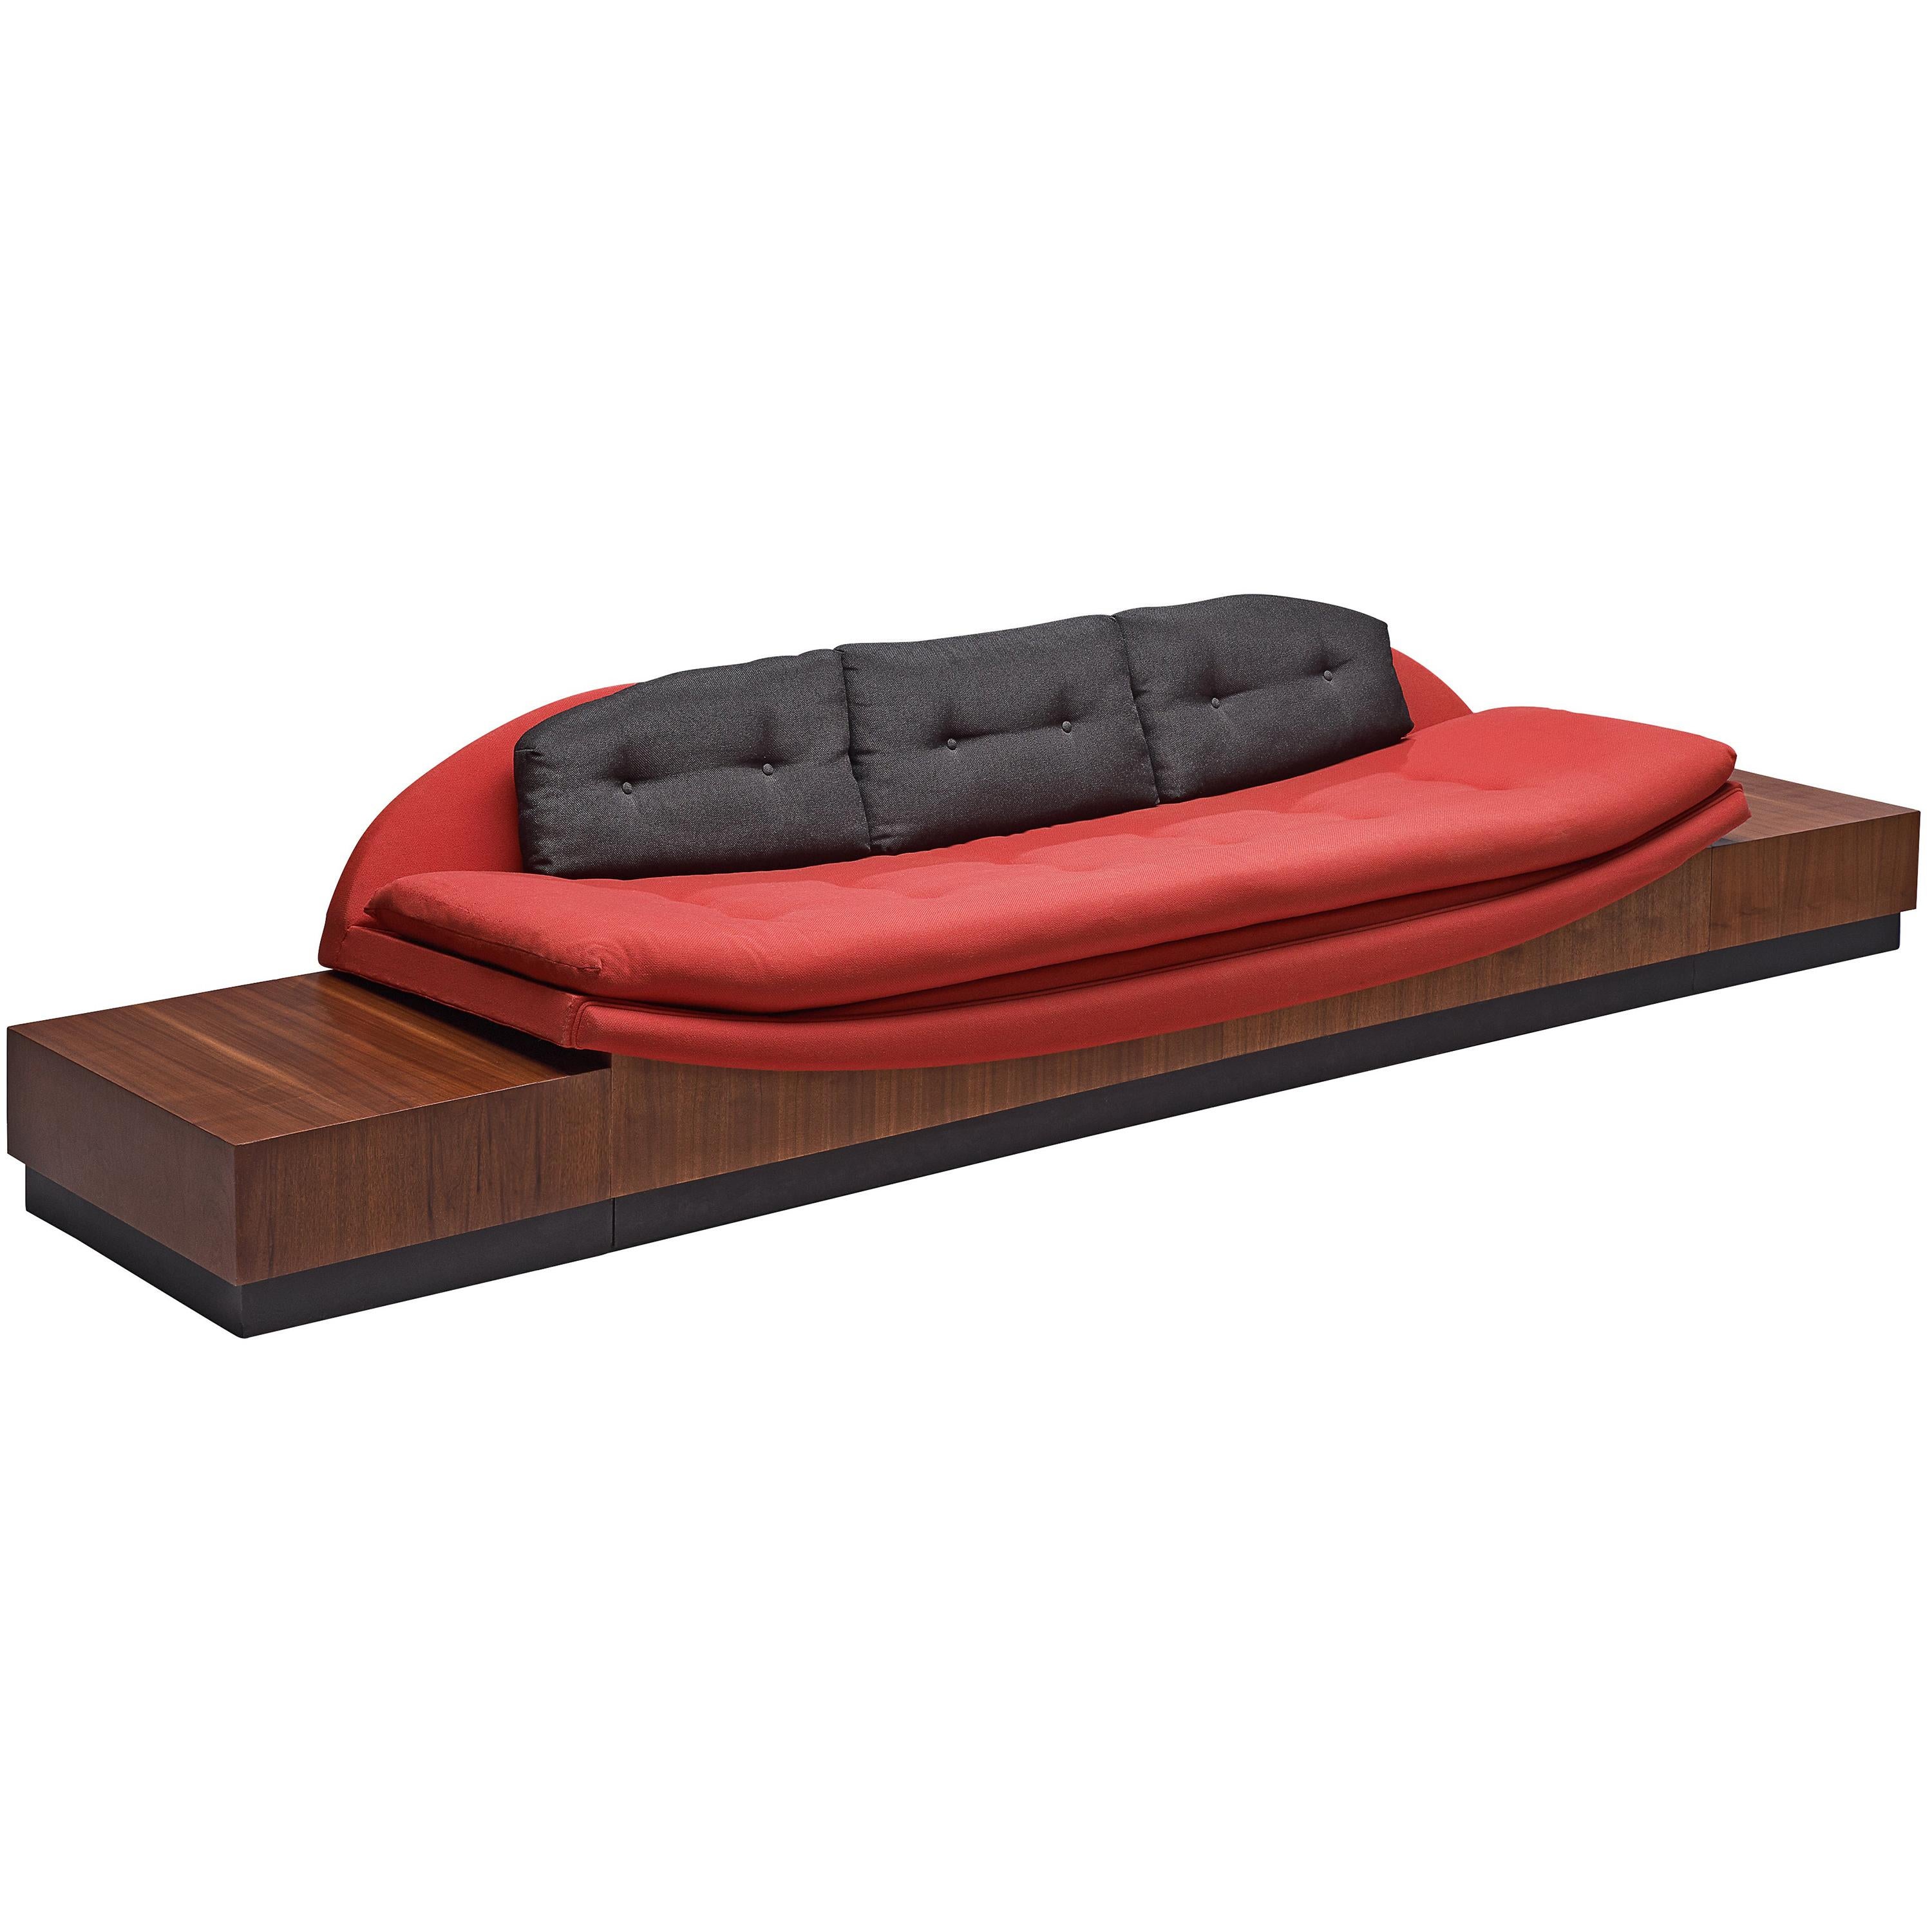 Adrian Pearsall 'Platform Gondola' Sofa in Walnut and Red Fabric